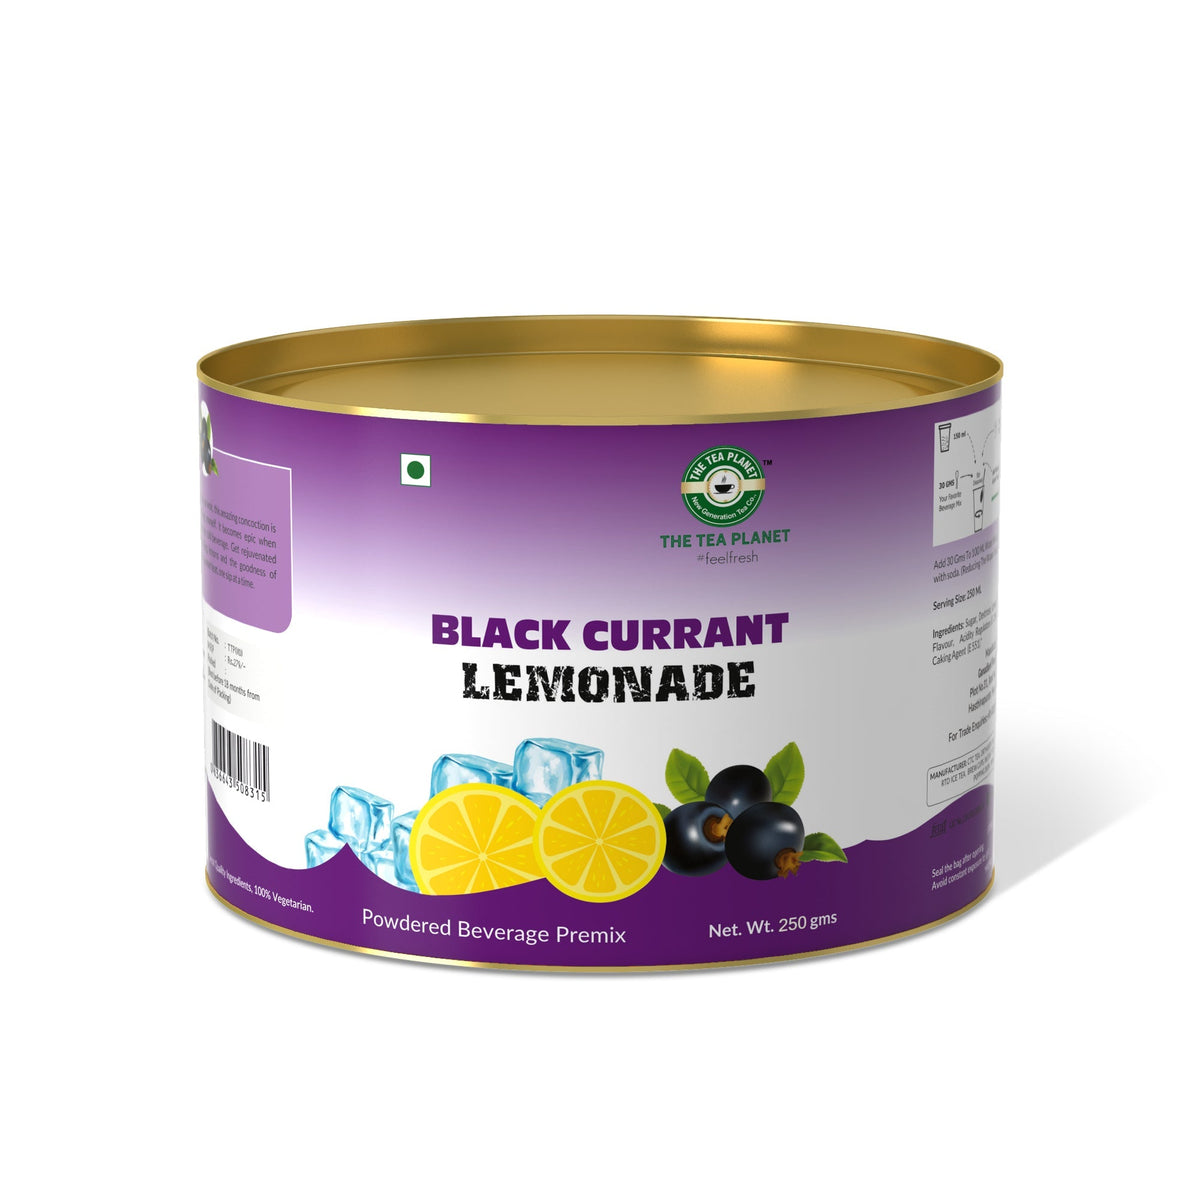 Black Currant Lemonade Premix - 400 gms